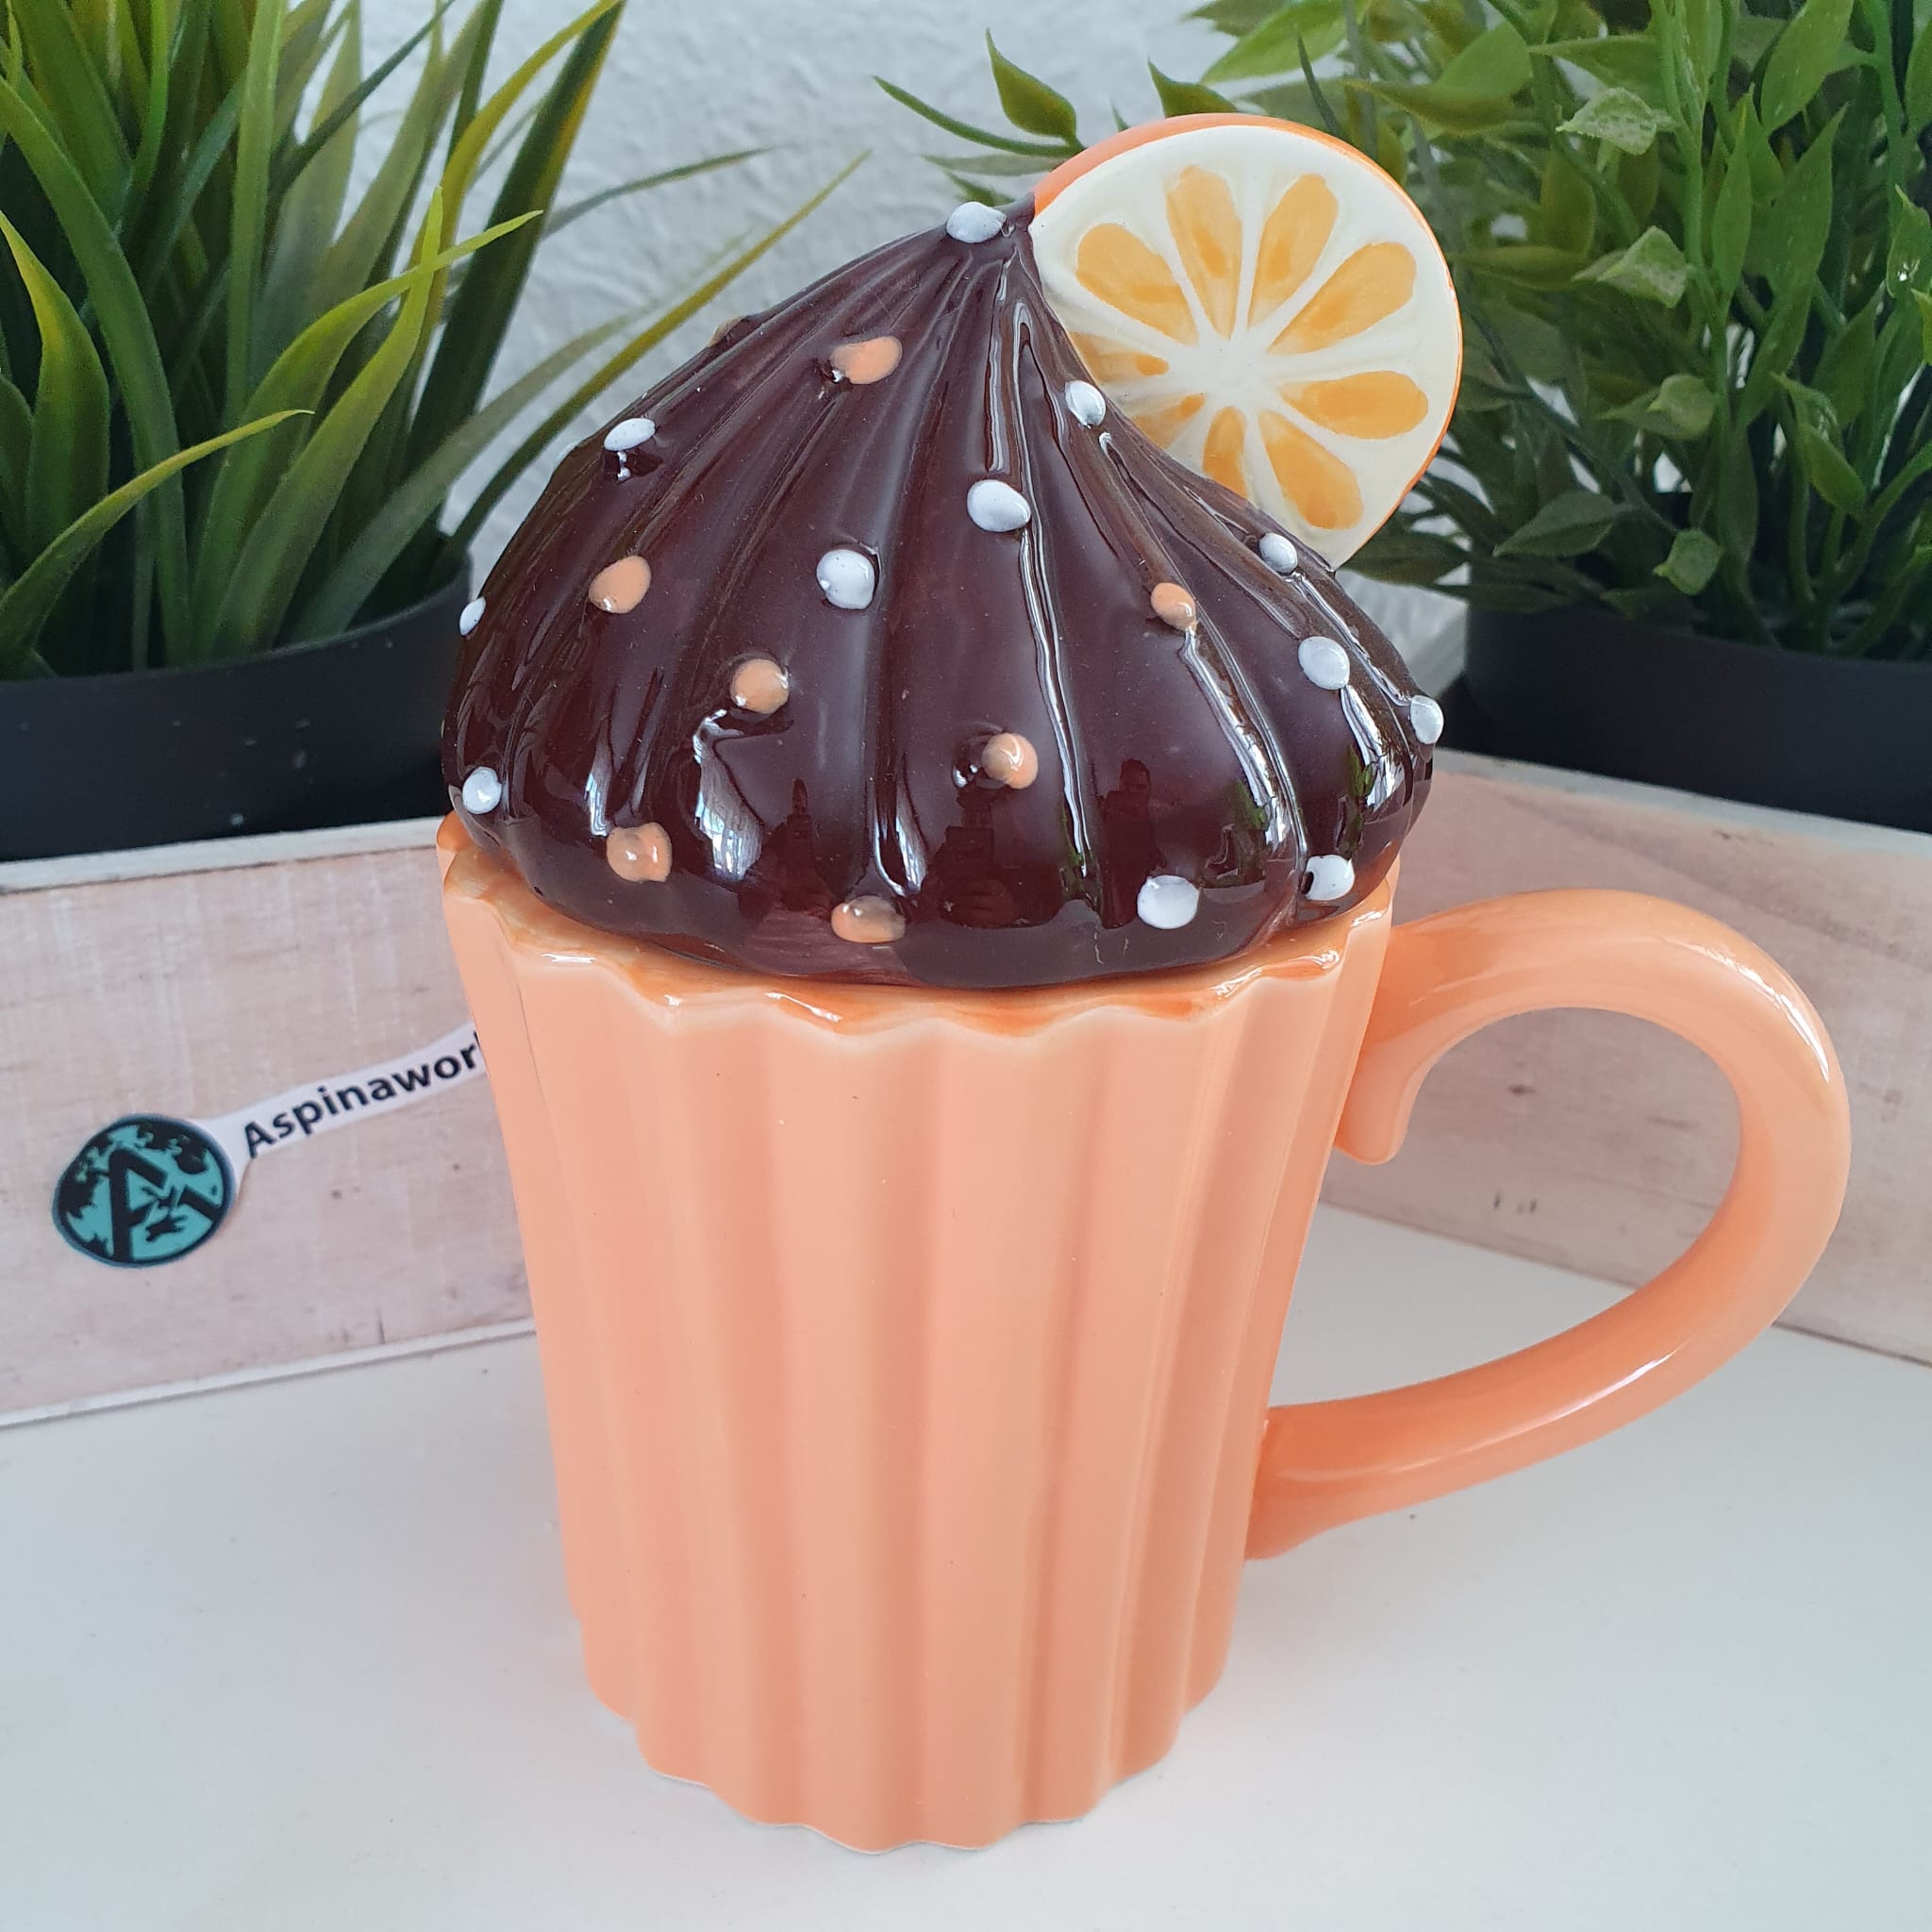 Cupcake Keramik Tasse mit Orange auf dem Deckel 300 ml